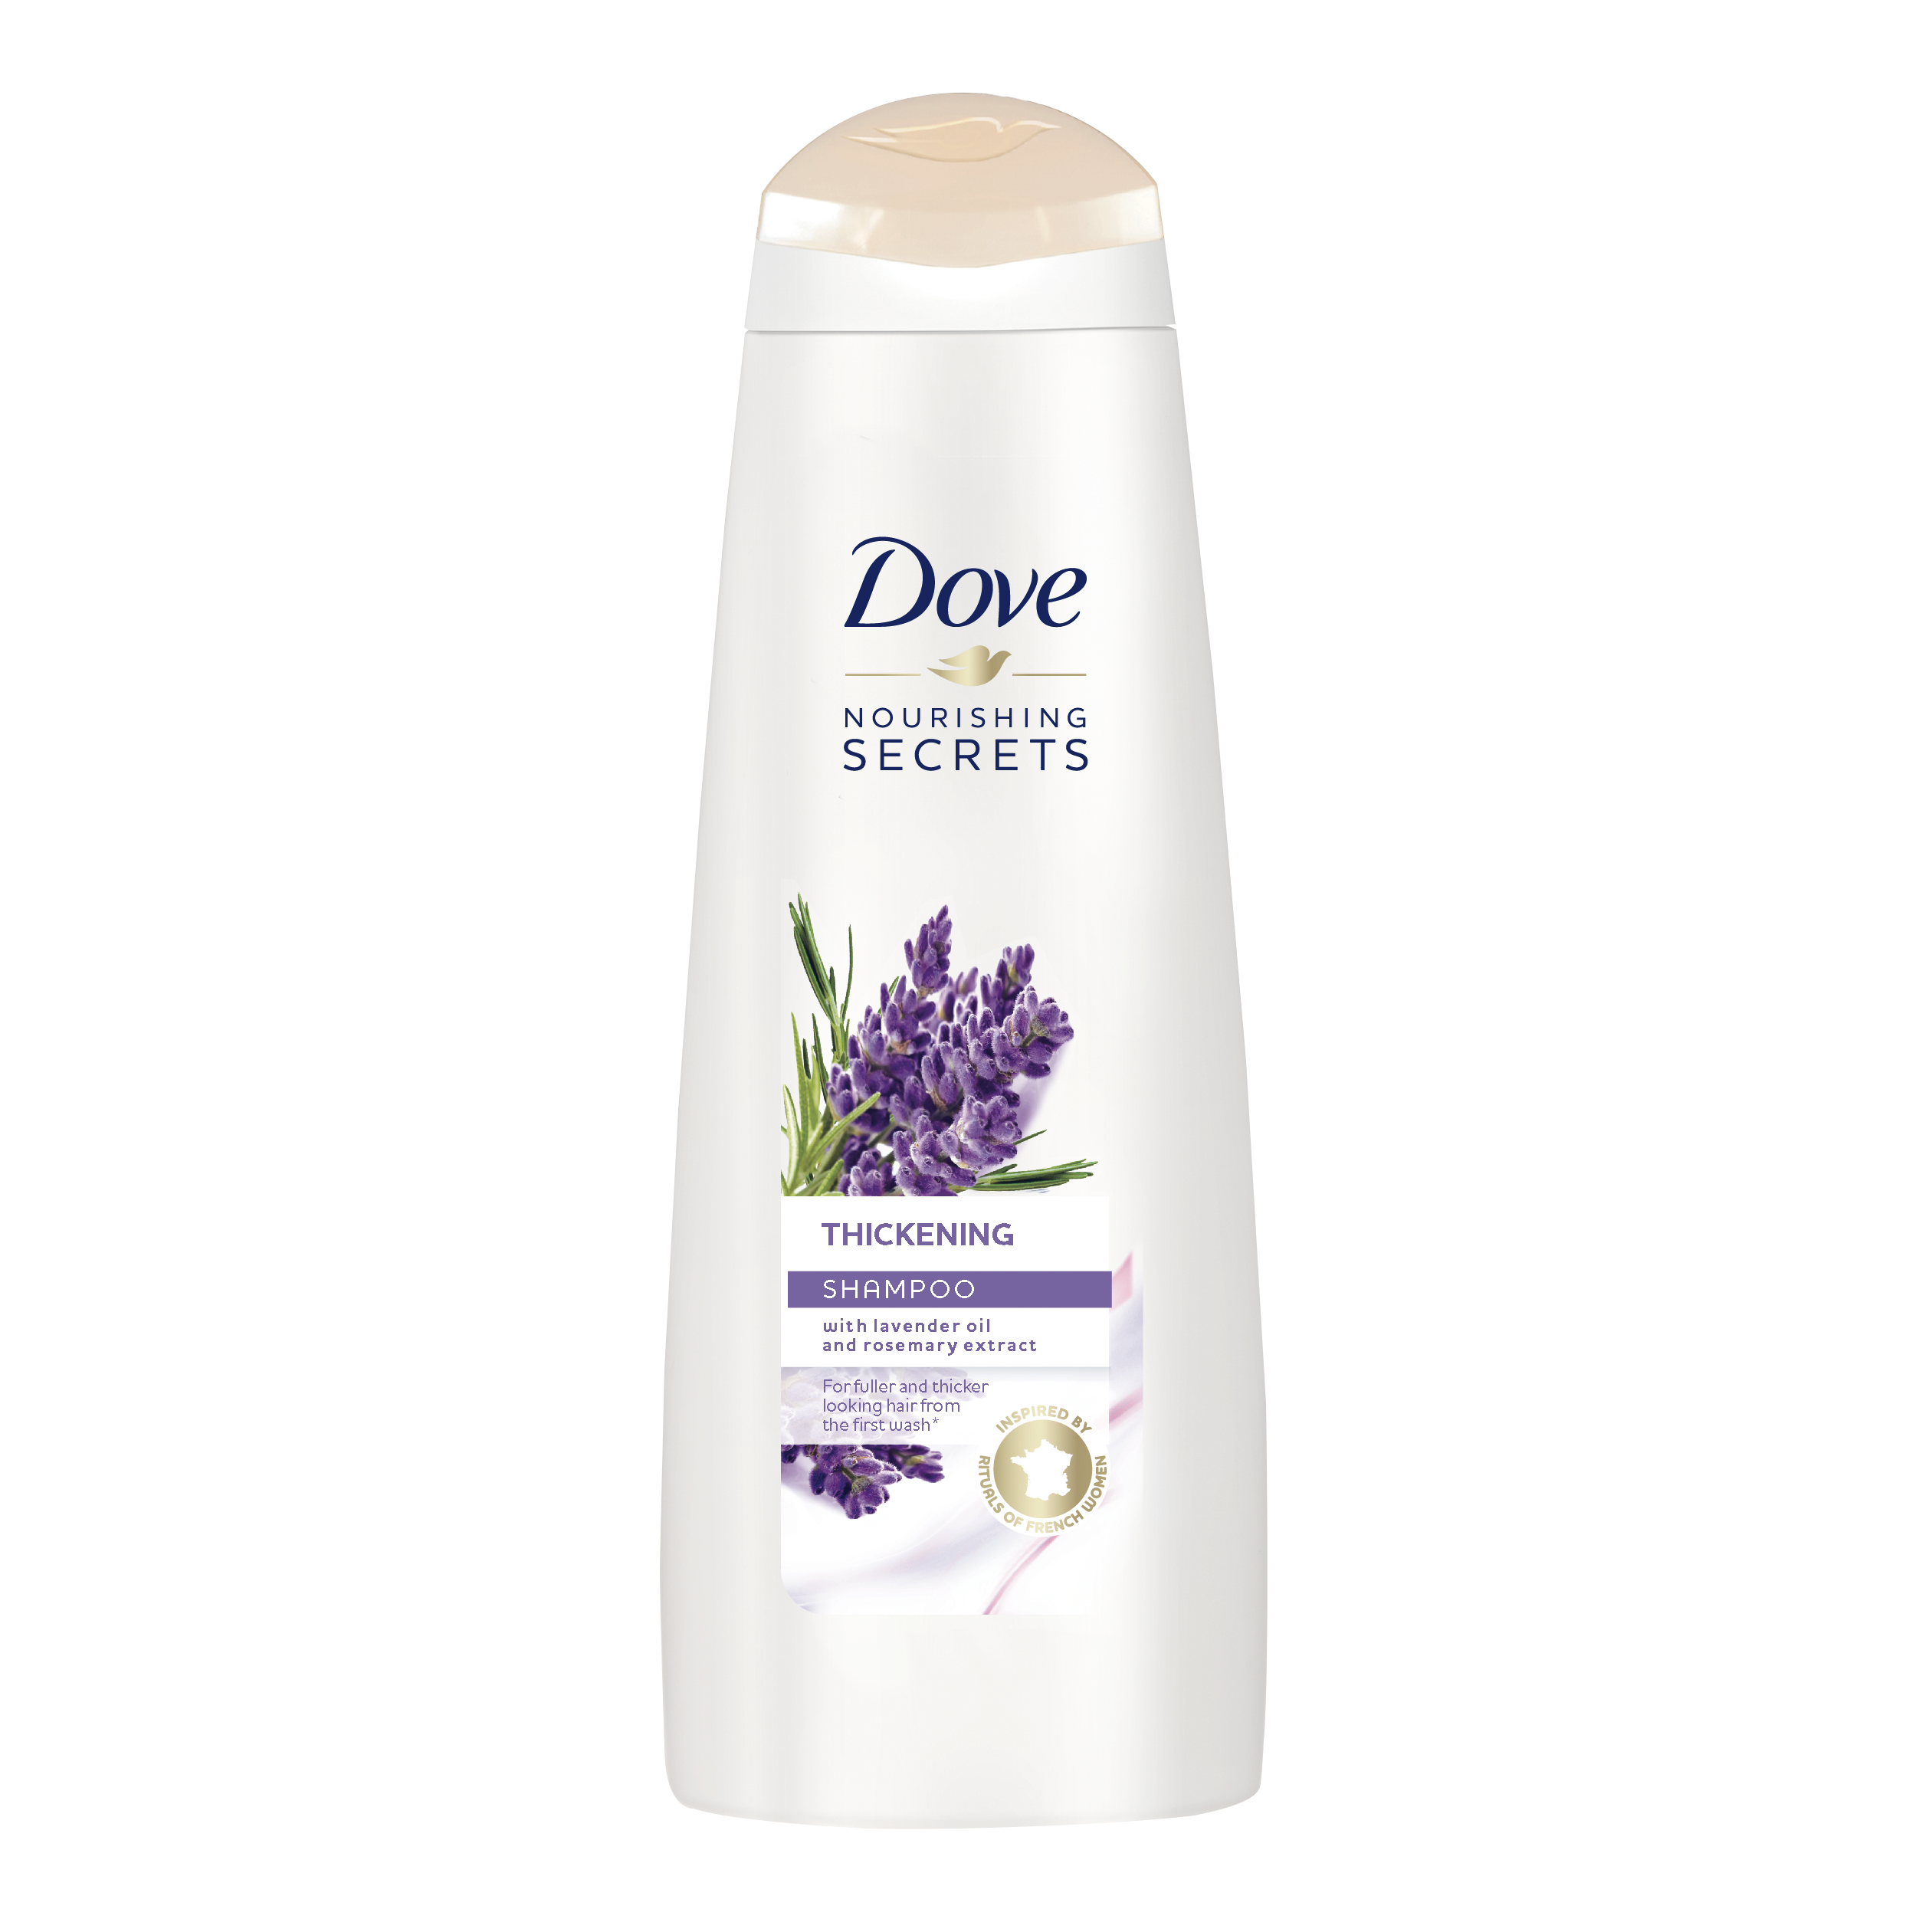 Dove Nourishing Secrets Thickening Shampoo